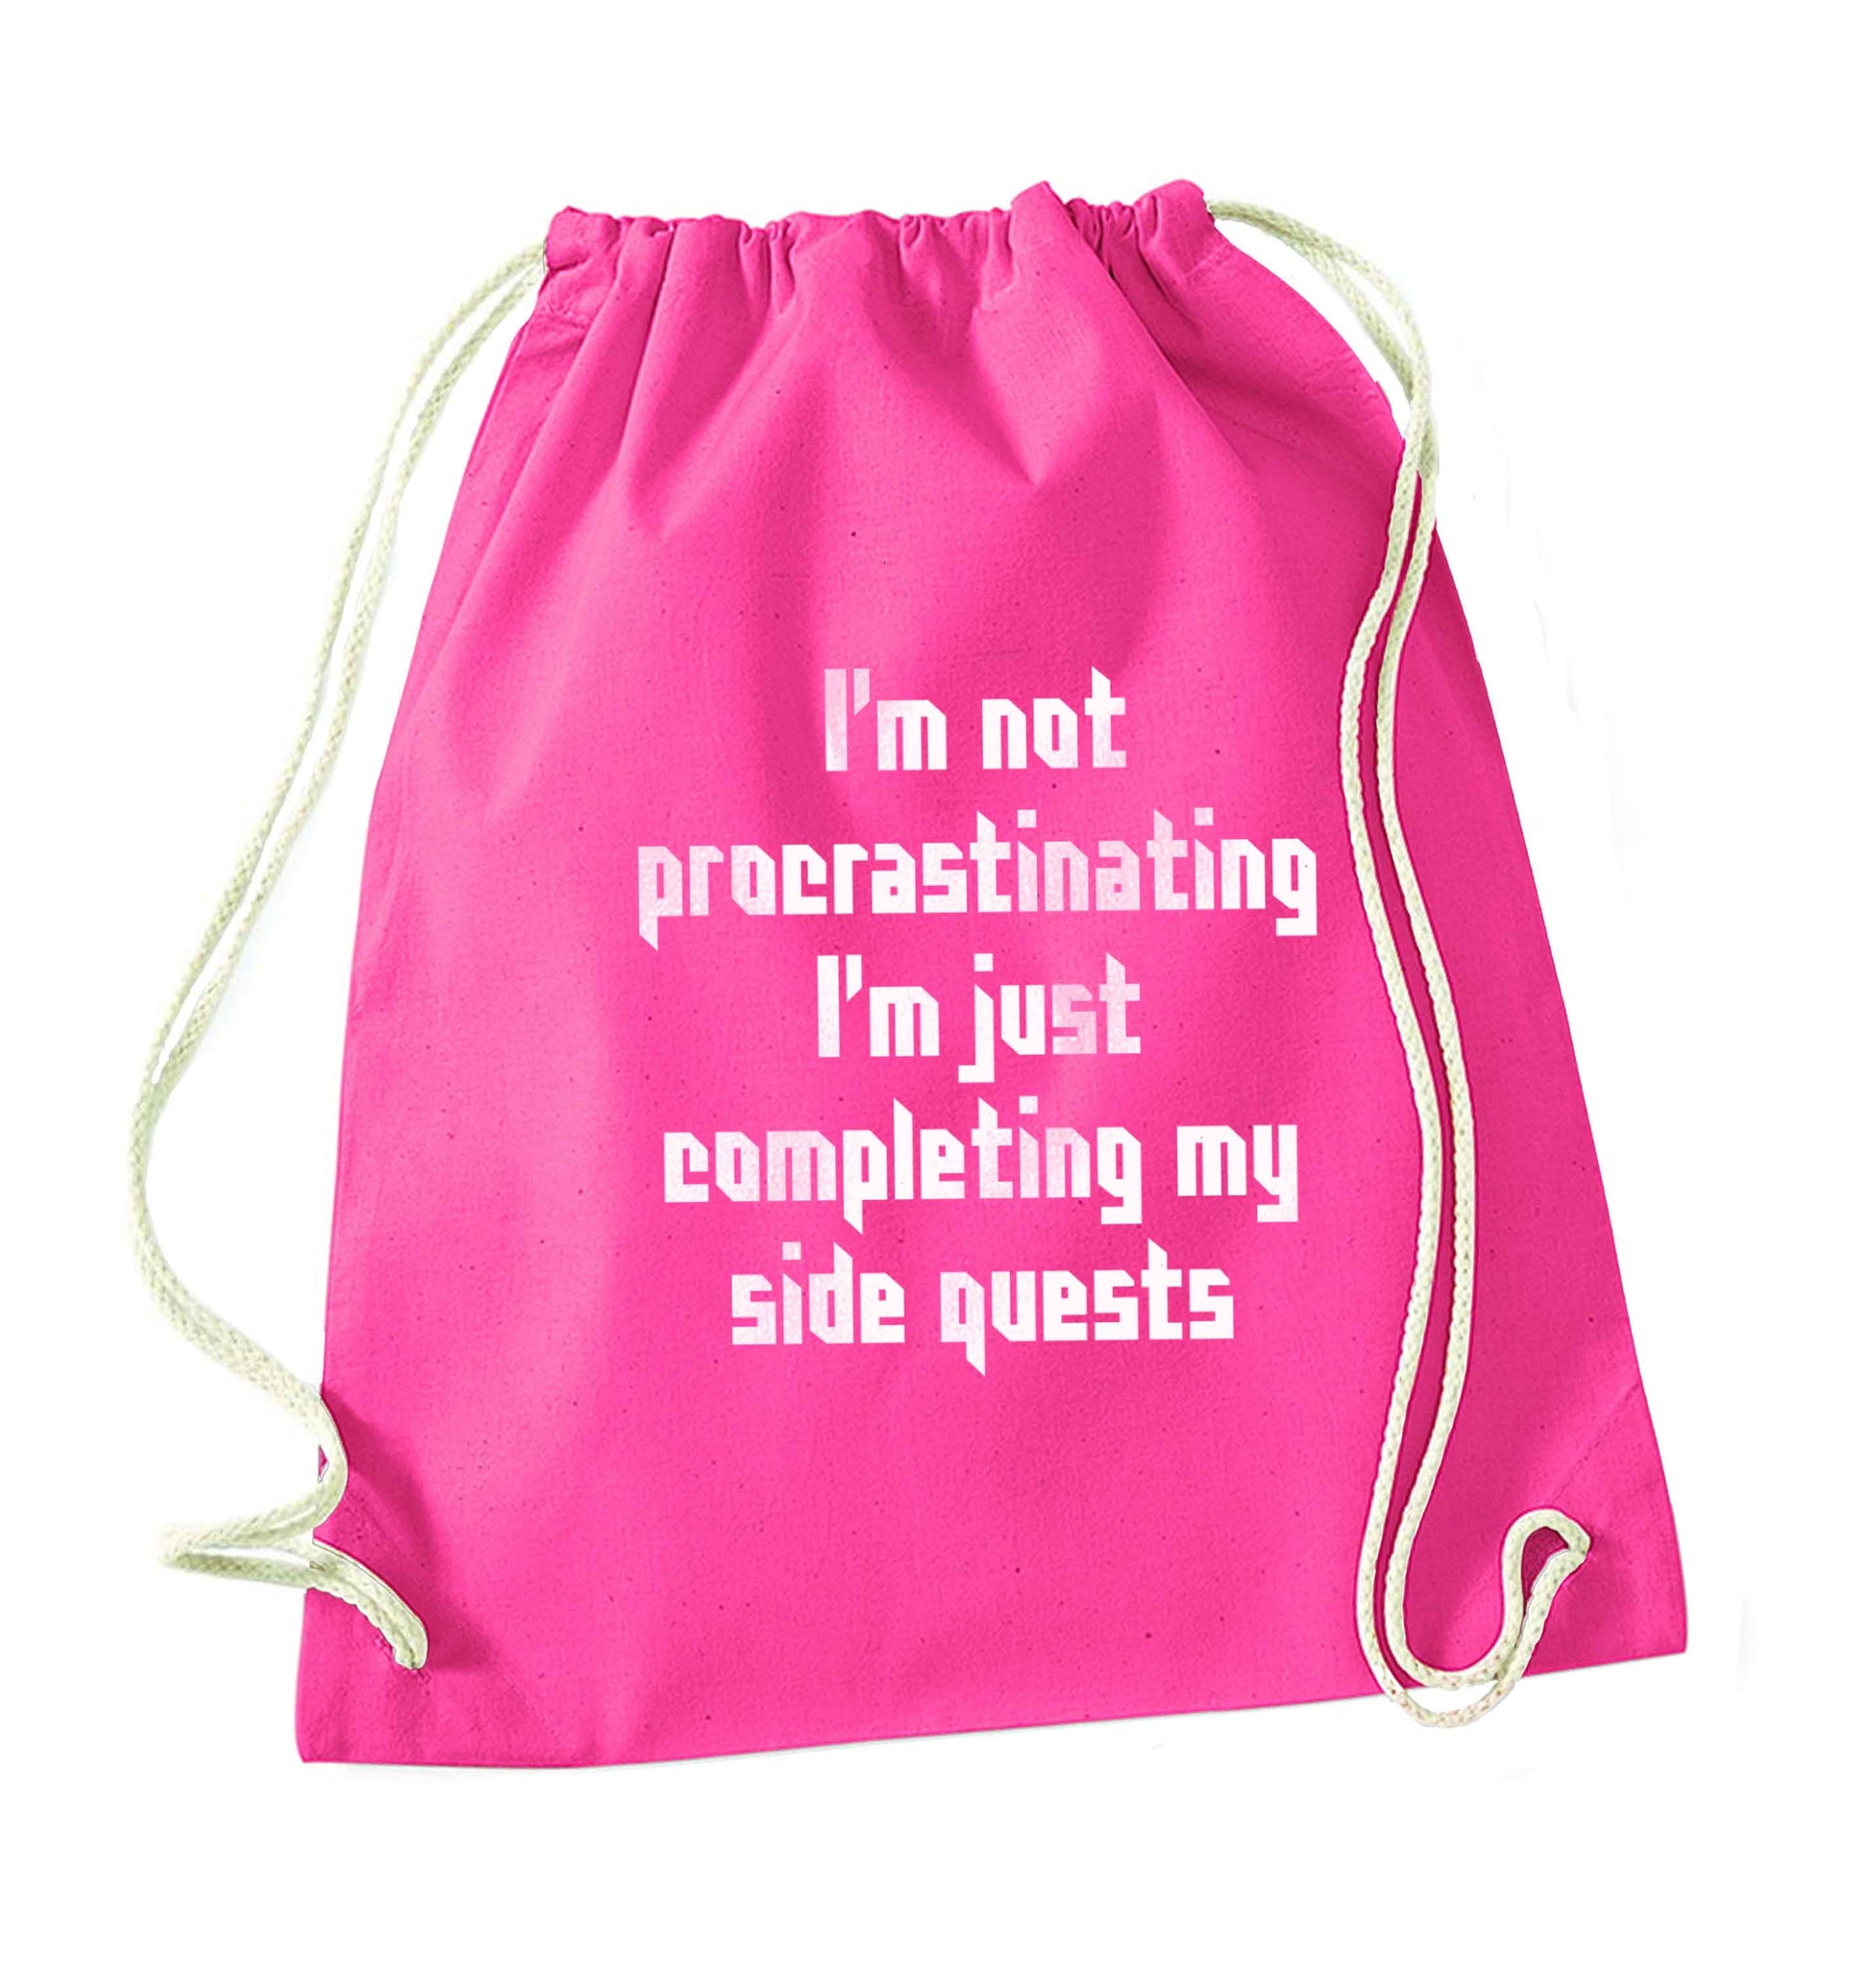 I'm not procrastinating I'm just completing my side quests pink drawstring bag